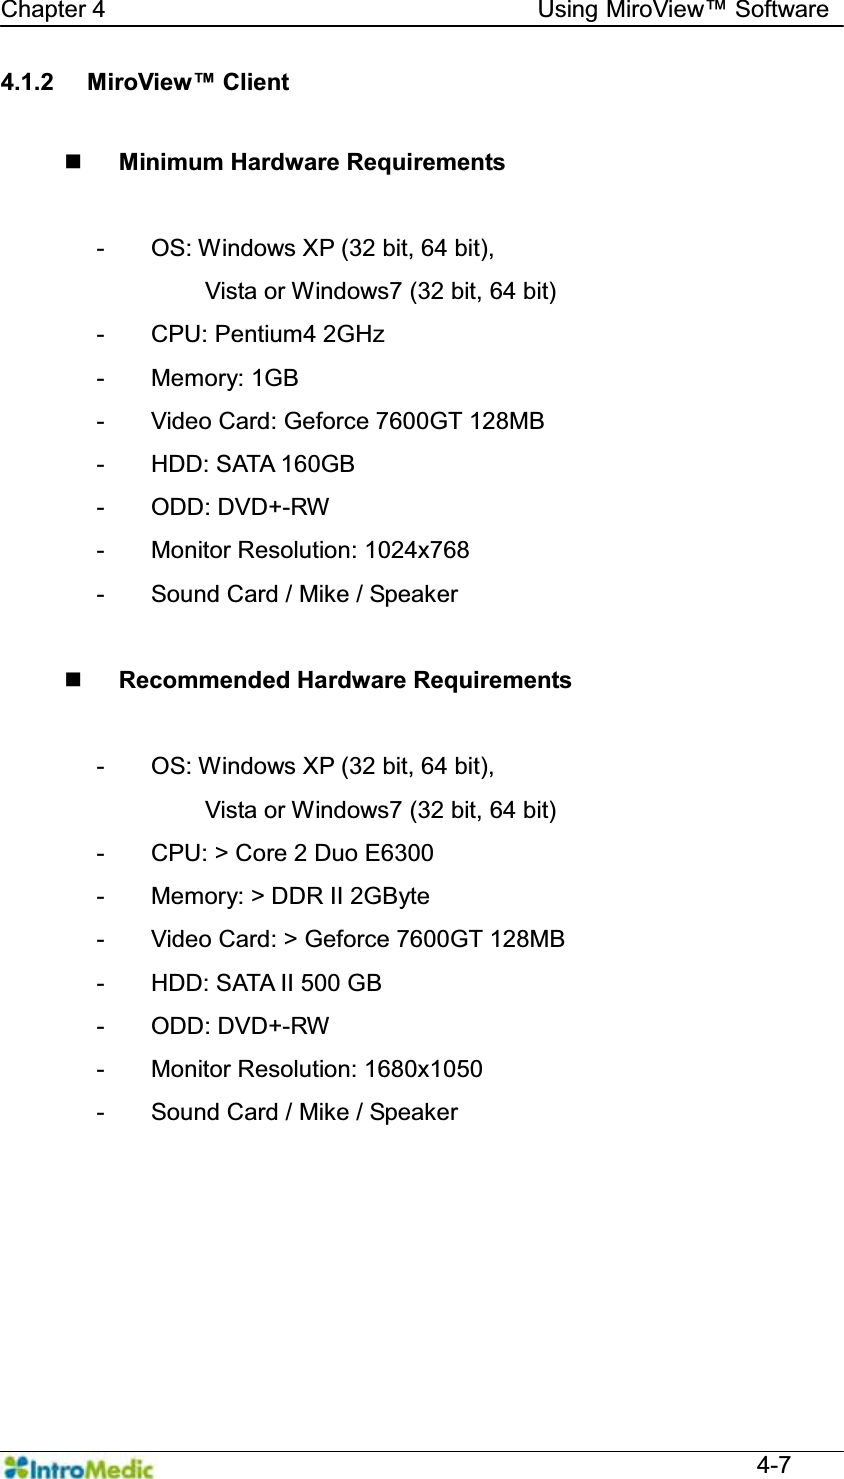   Chapter 4                                    Using 0LUR9LHZ Software  4-7 4.1.2  0LUR9LHZClient   Minimum Hardware Requirements  -  OS: Windows XP (32 bit, 64 bit),   Vista or Windows7 (32 bit, 64 bit) - CPU: Pentium4 2GHz - Memory: 1GB -  Video Card: Geforce 7600GT 128MB -  HDD: SATA 160GB - ODD: DVD+-RW - Monitor Resolution: 1024x768 -  Sound Card / Mike / Speaker   Recommended Hardware Requirements  -  OS: Windows XP (32 bit, 64 bit),   Vista or Windows7 (32 bit, 64 bit) -  CPU: &gt; Core 2 Duo E6300 -  Memory: &gt; DDR II 2GByte -  Video Card: &gt; Geforce 7600GT 128MB -  HDD: SATA II 500 GB - ODD: DVD+-RW - Monitor Resolution: 1680x1050 -  Sound Card / Mike / Speaker  